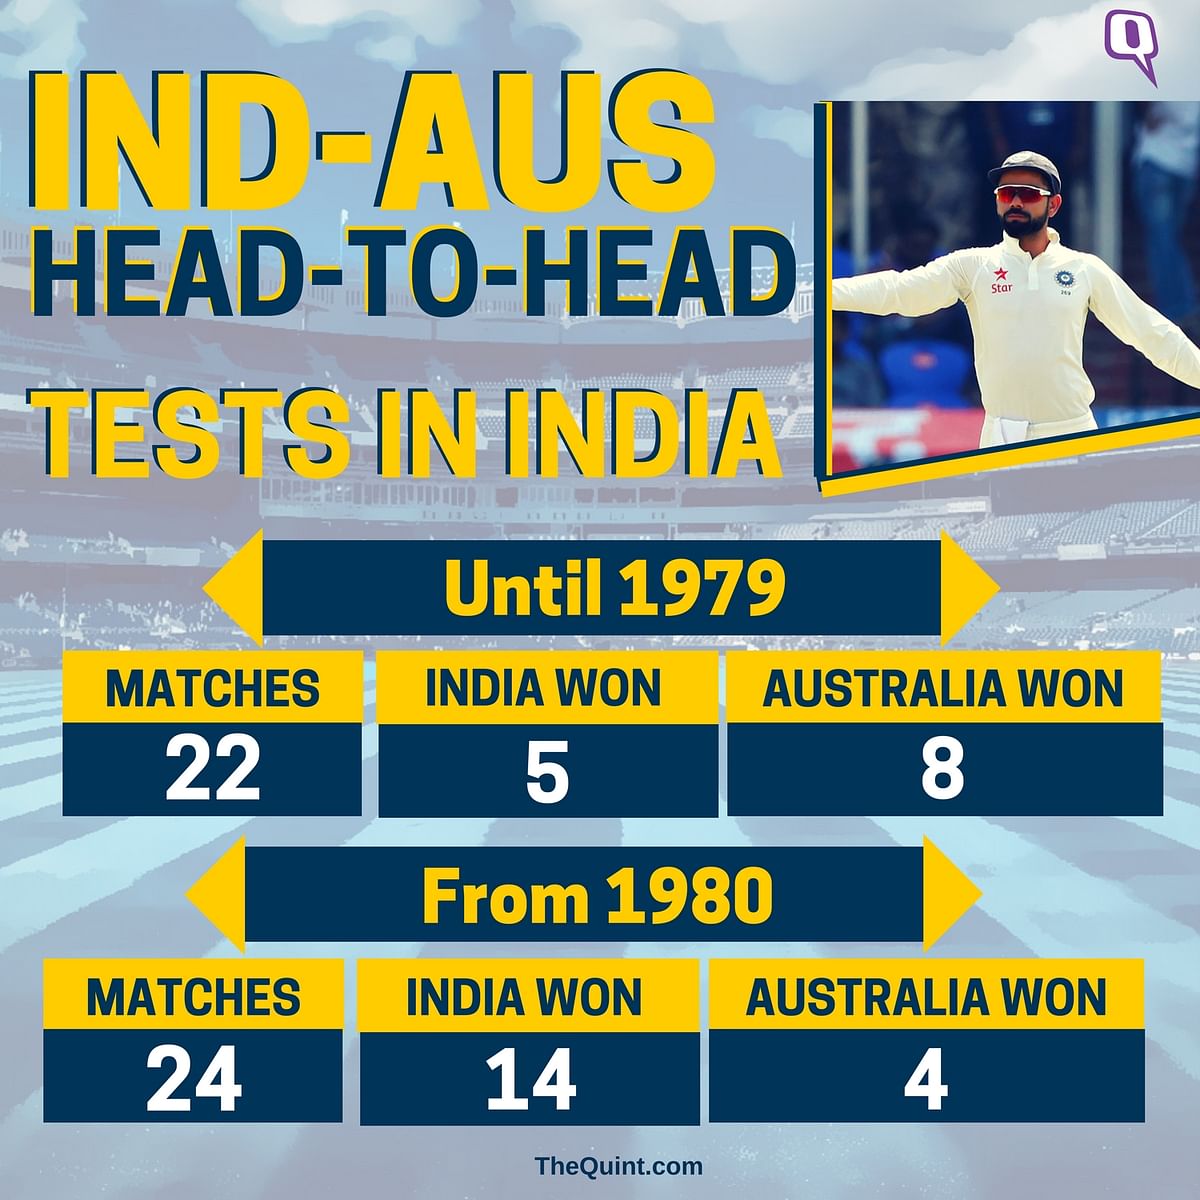 Australia last won a Test match in India in 2008.